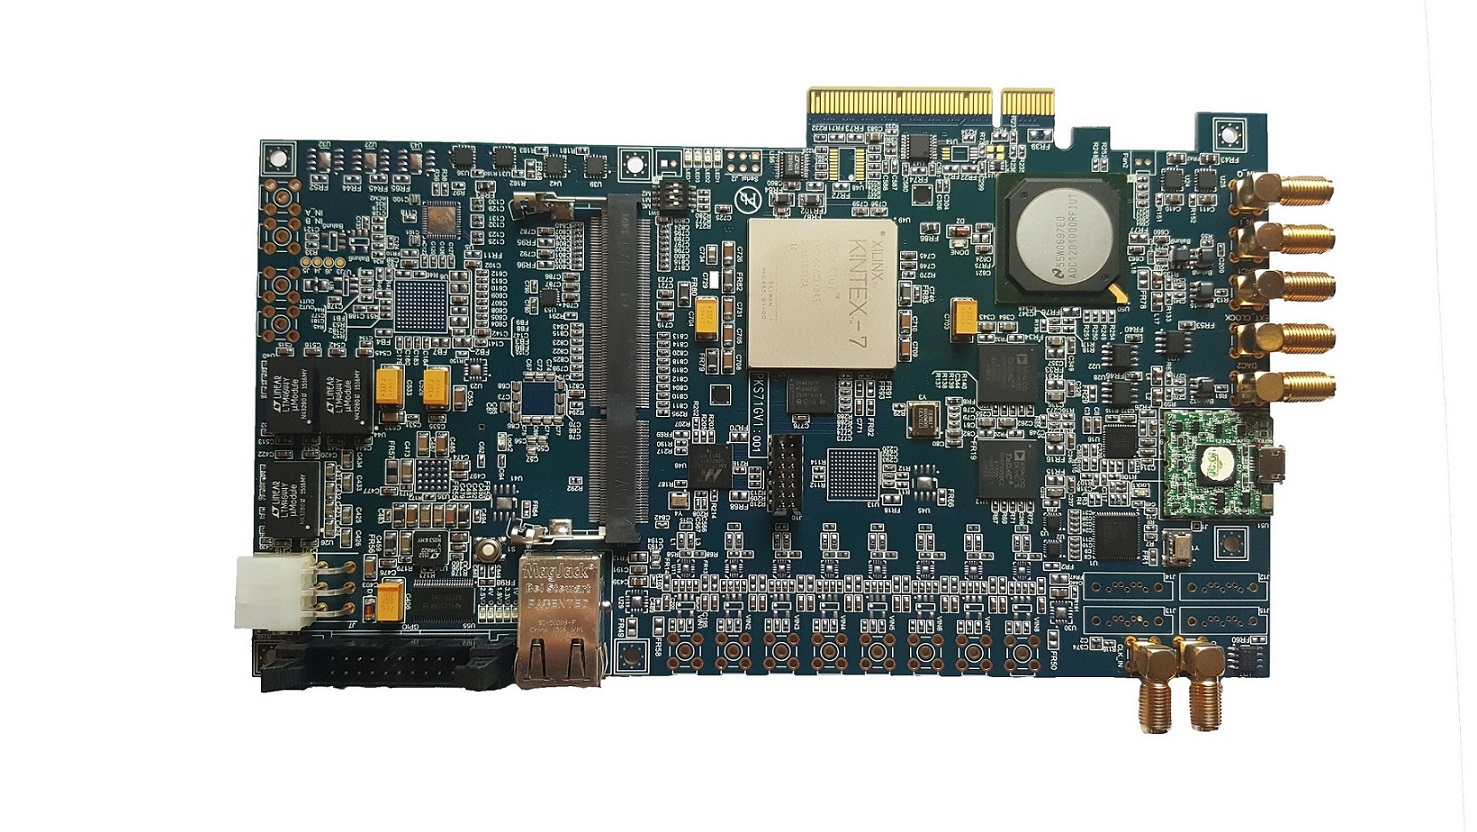 برد پردازشی Kintex-7 410T, PCIe, ADC 3.6 GSPS Interleaved or 1.8 GSPS Dual, 8Ch ADC 125 MSPS, 2Ch DAC 2.5 GSPS